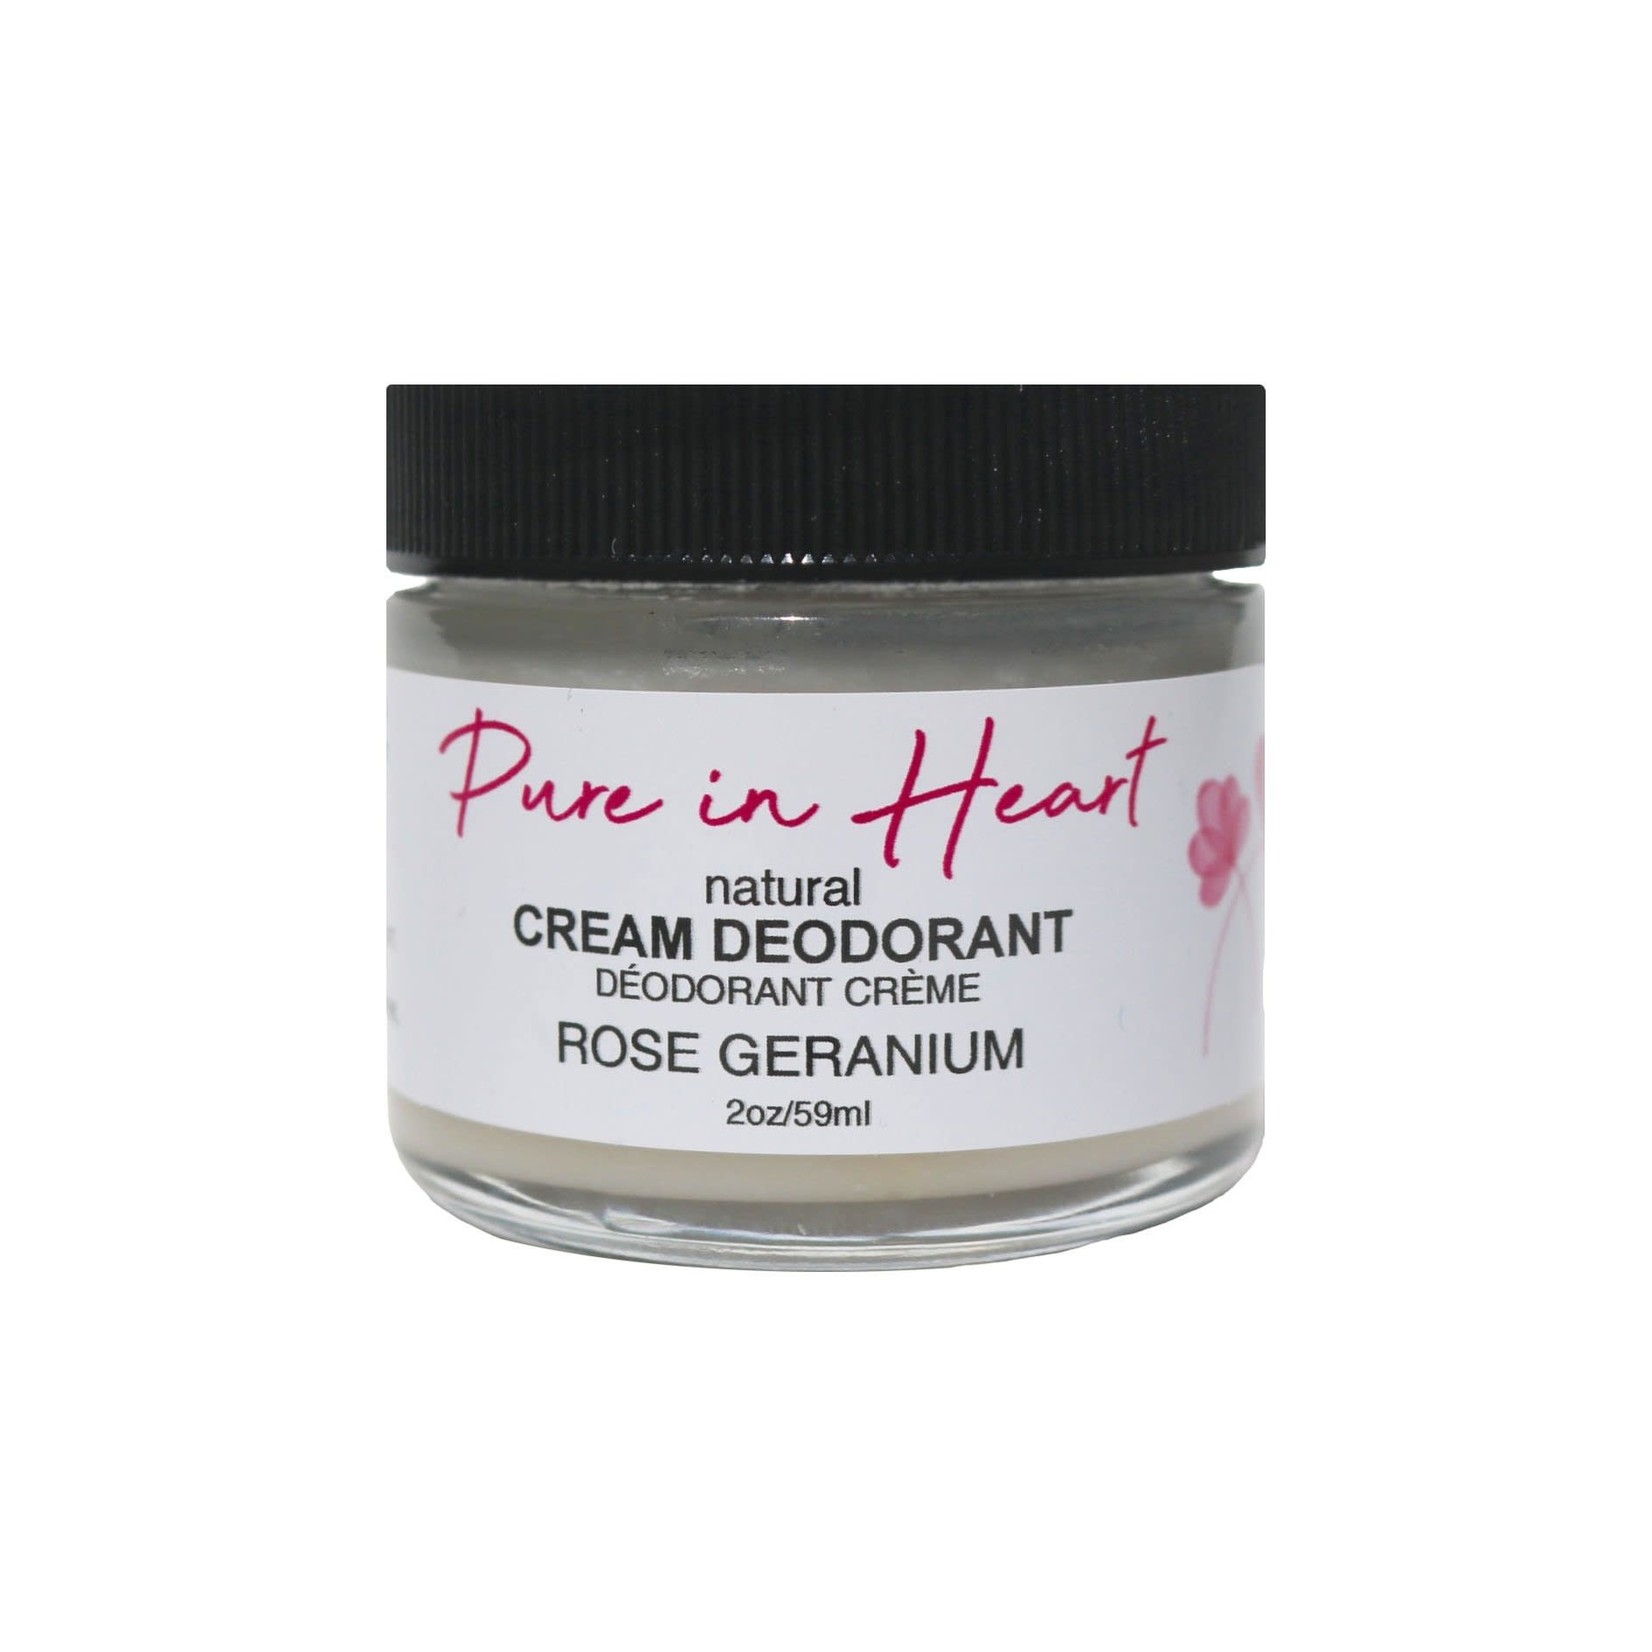 Pure in Heart Pure in Heart Natural Cream Deodorant